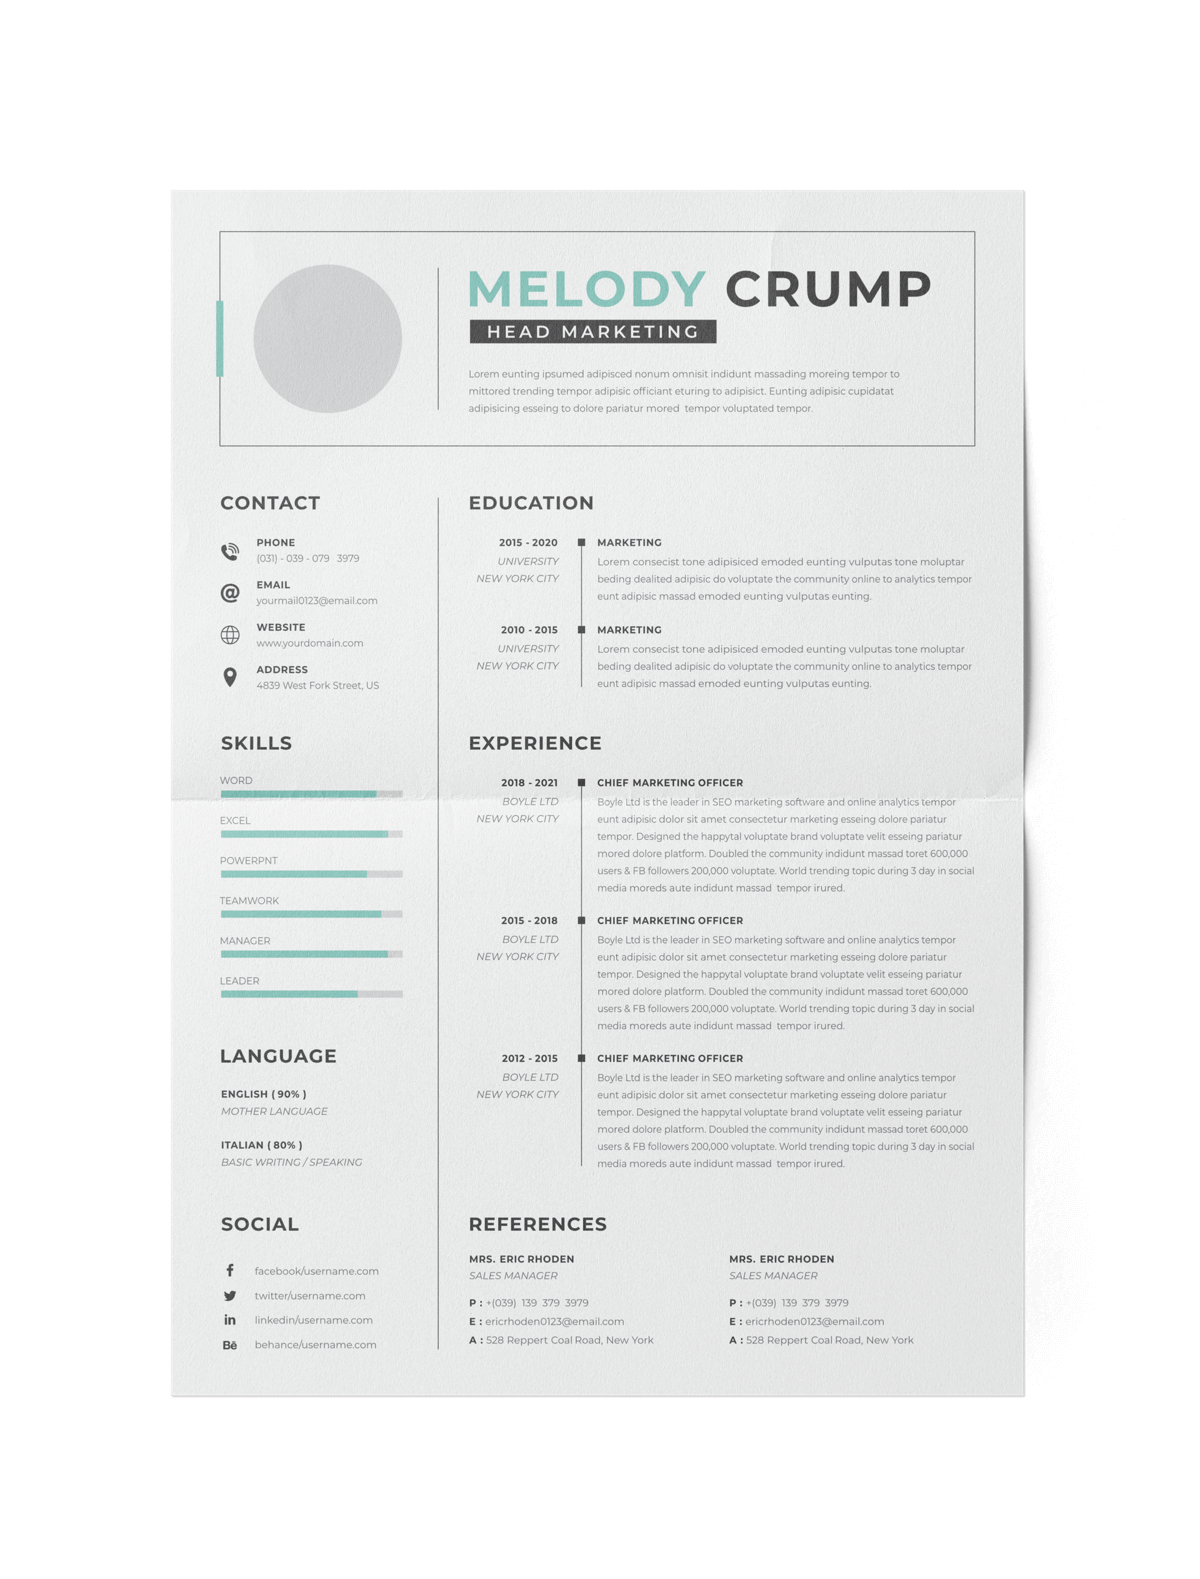 CV #135 Melody Crump